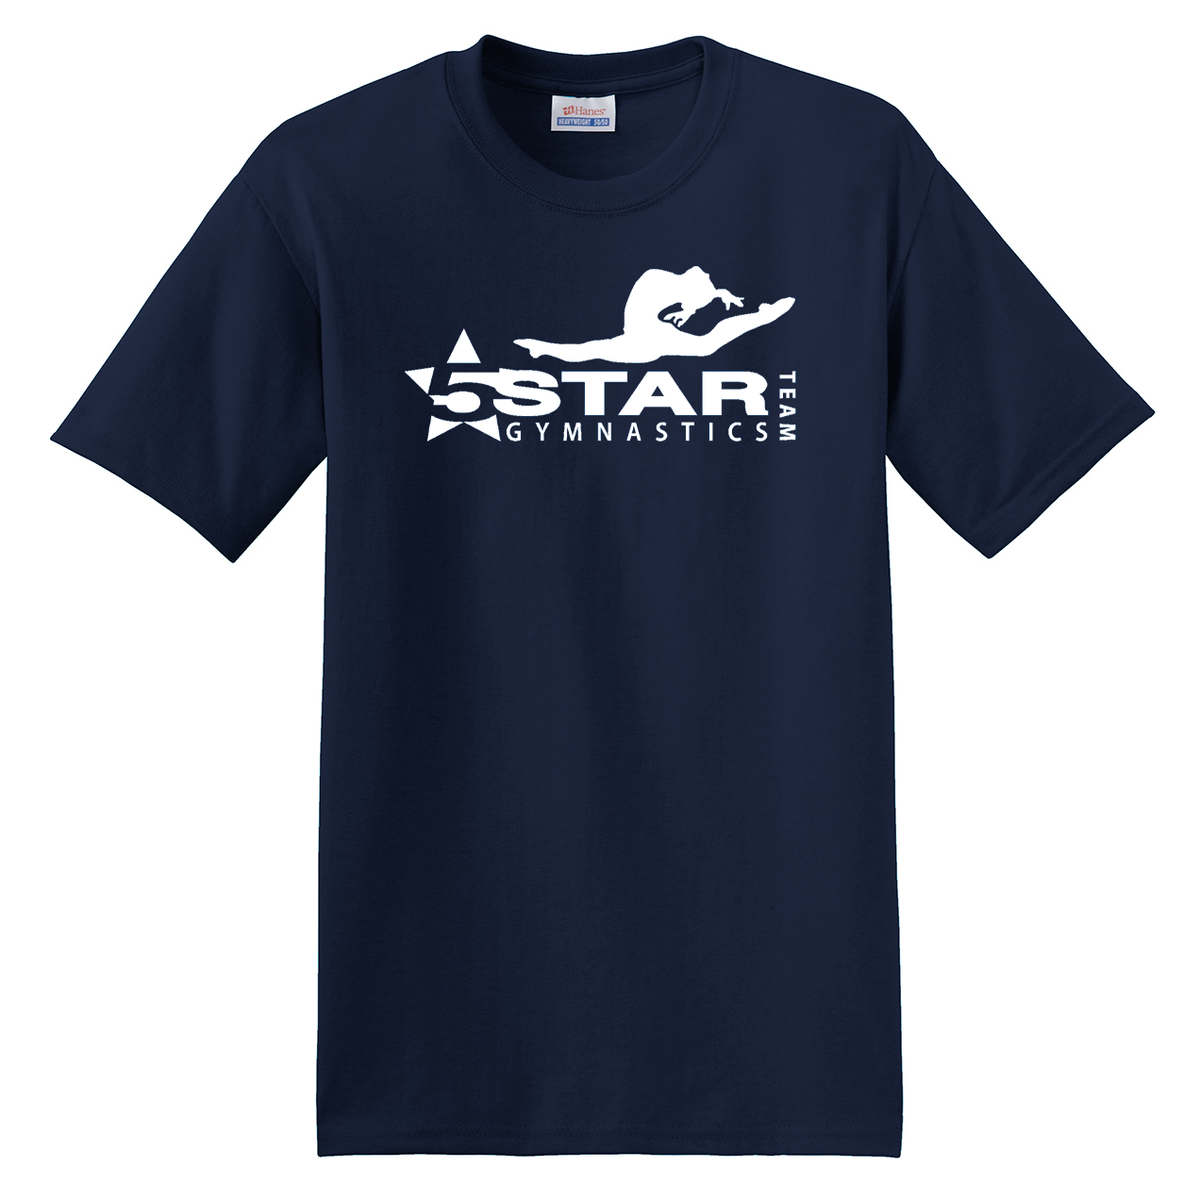 5 Star Gymnastics T-Shirt